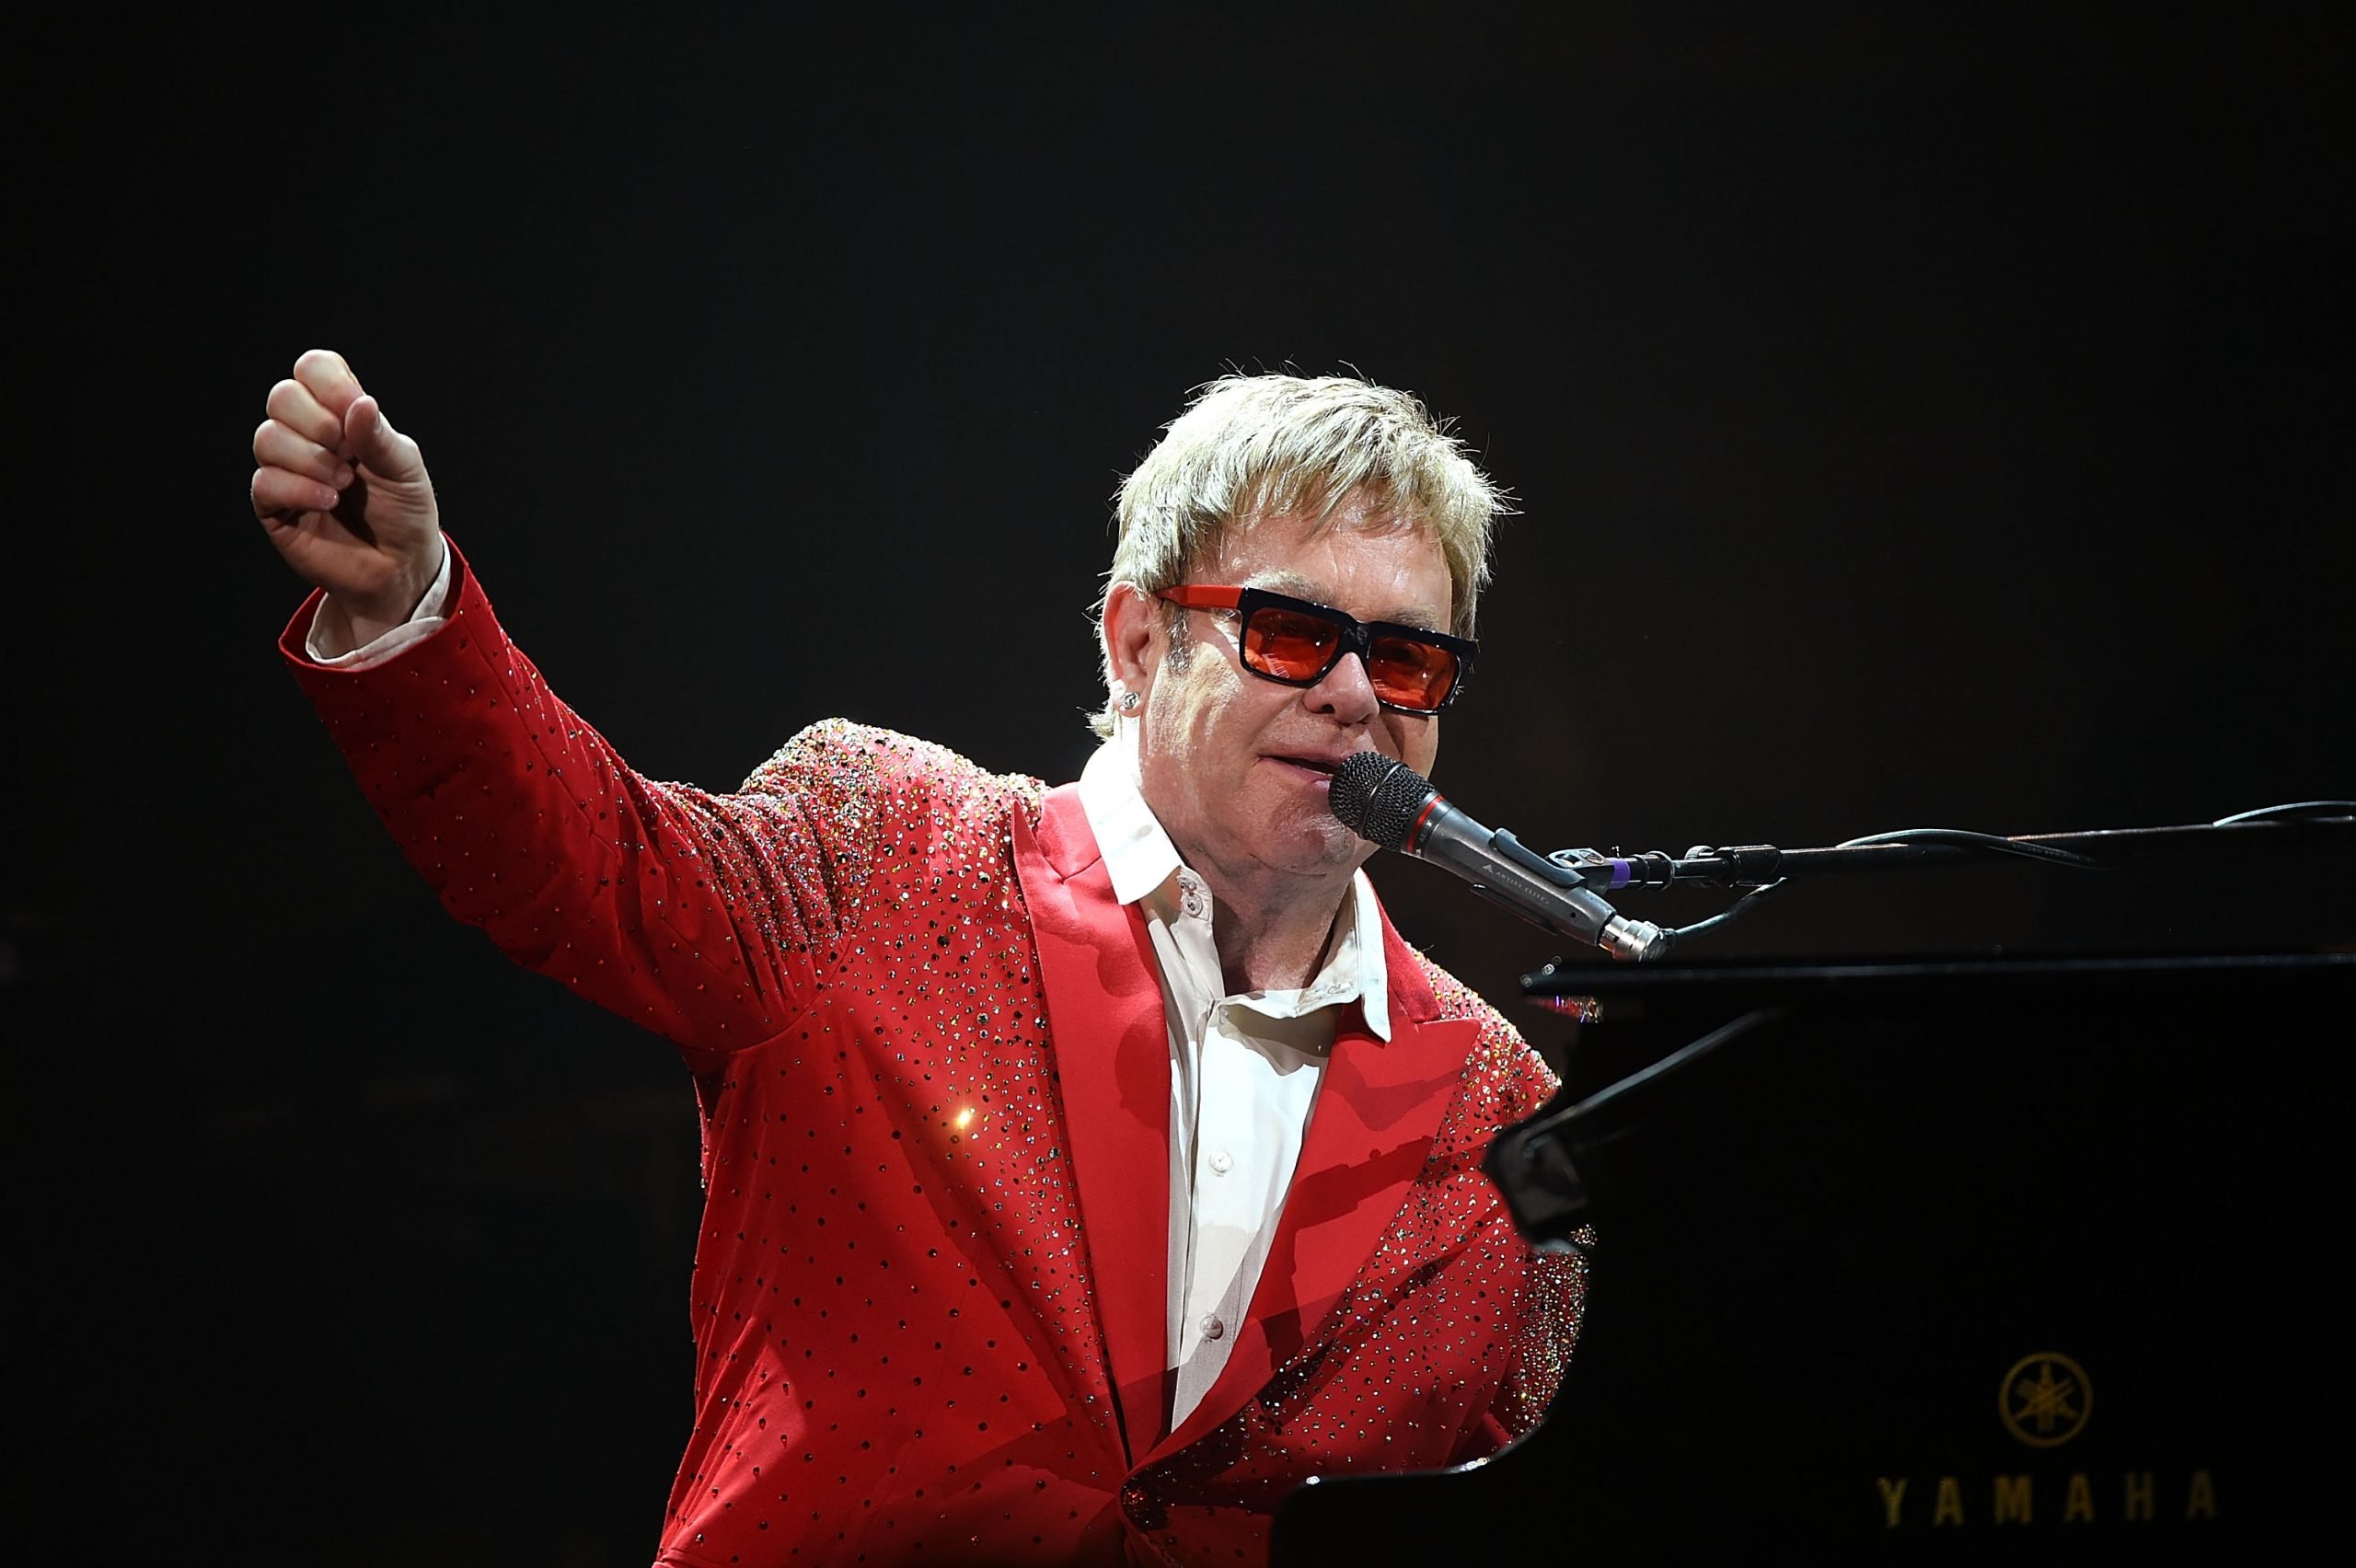 Where to Watch the Elton John ‘Rocketman’ Movie